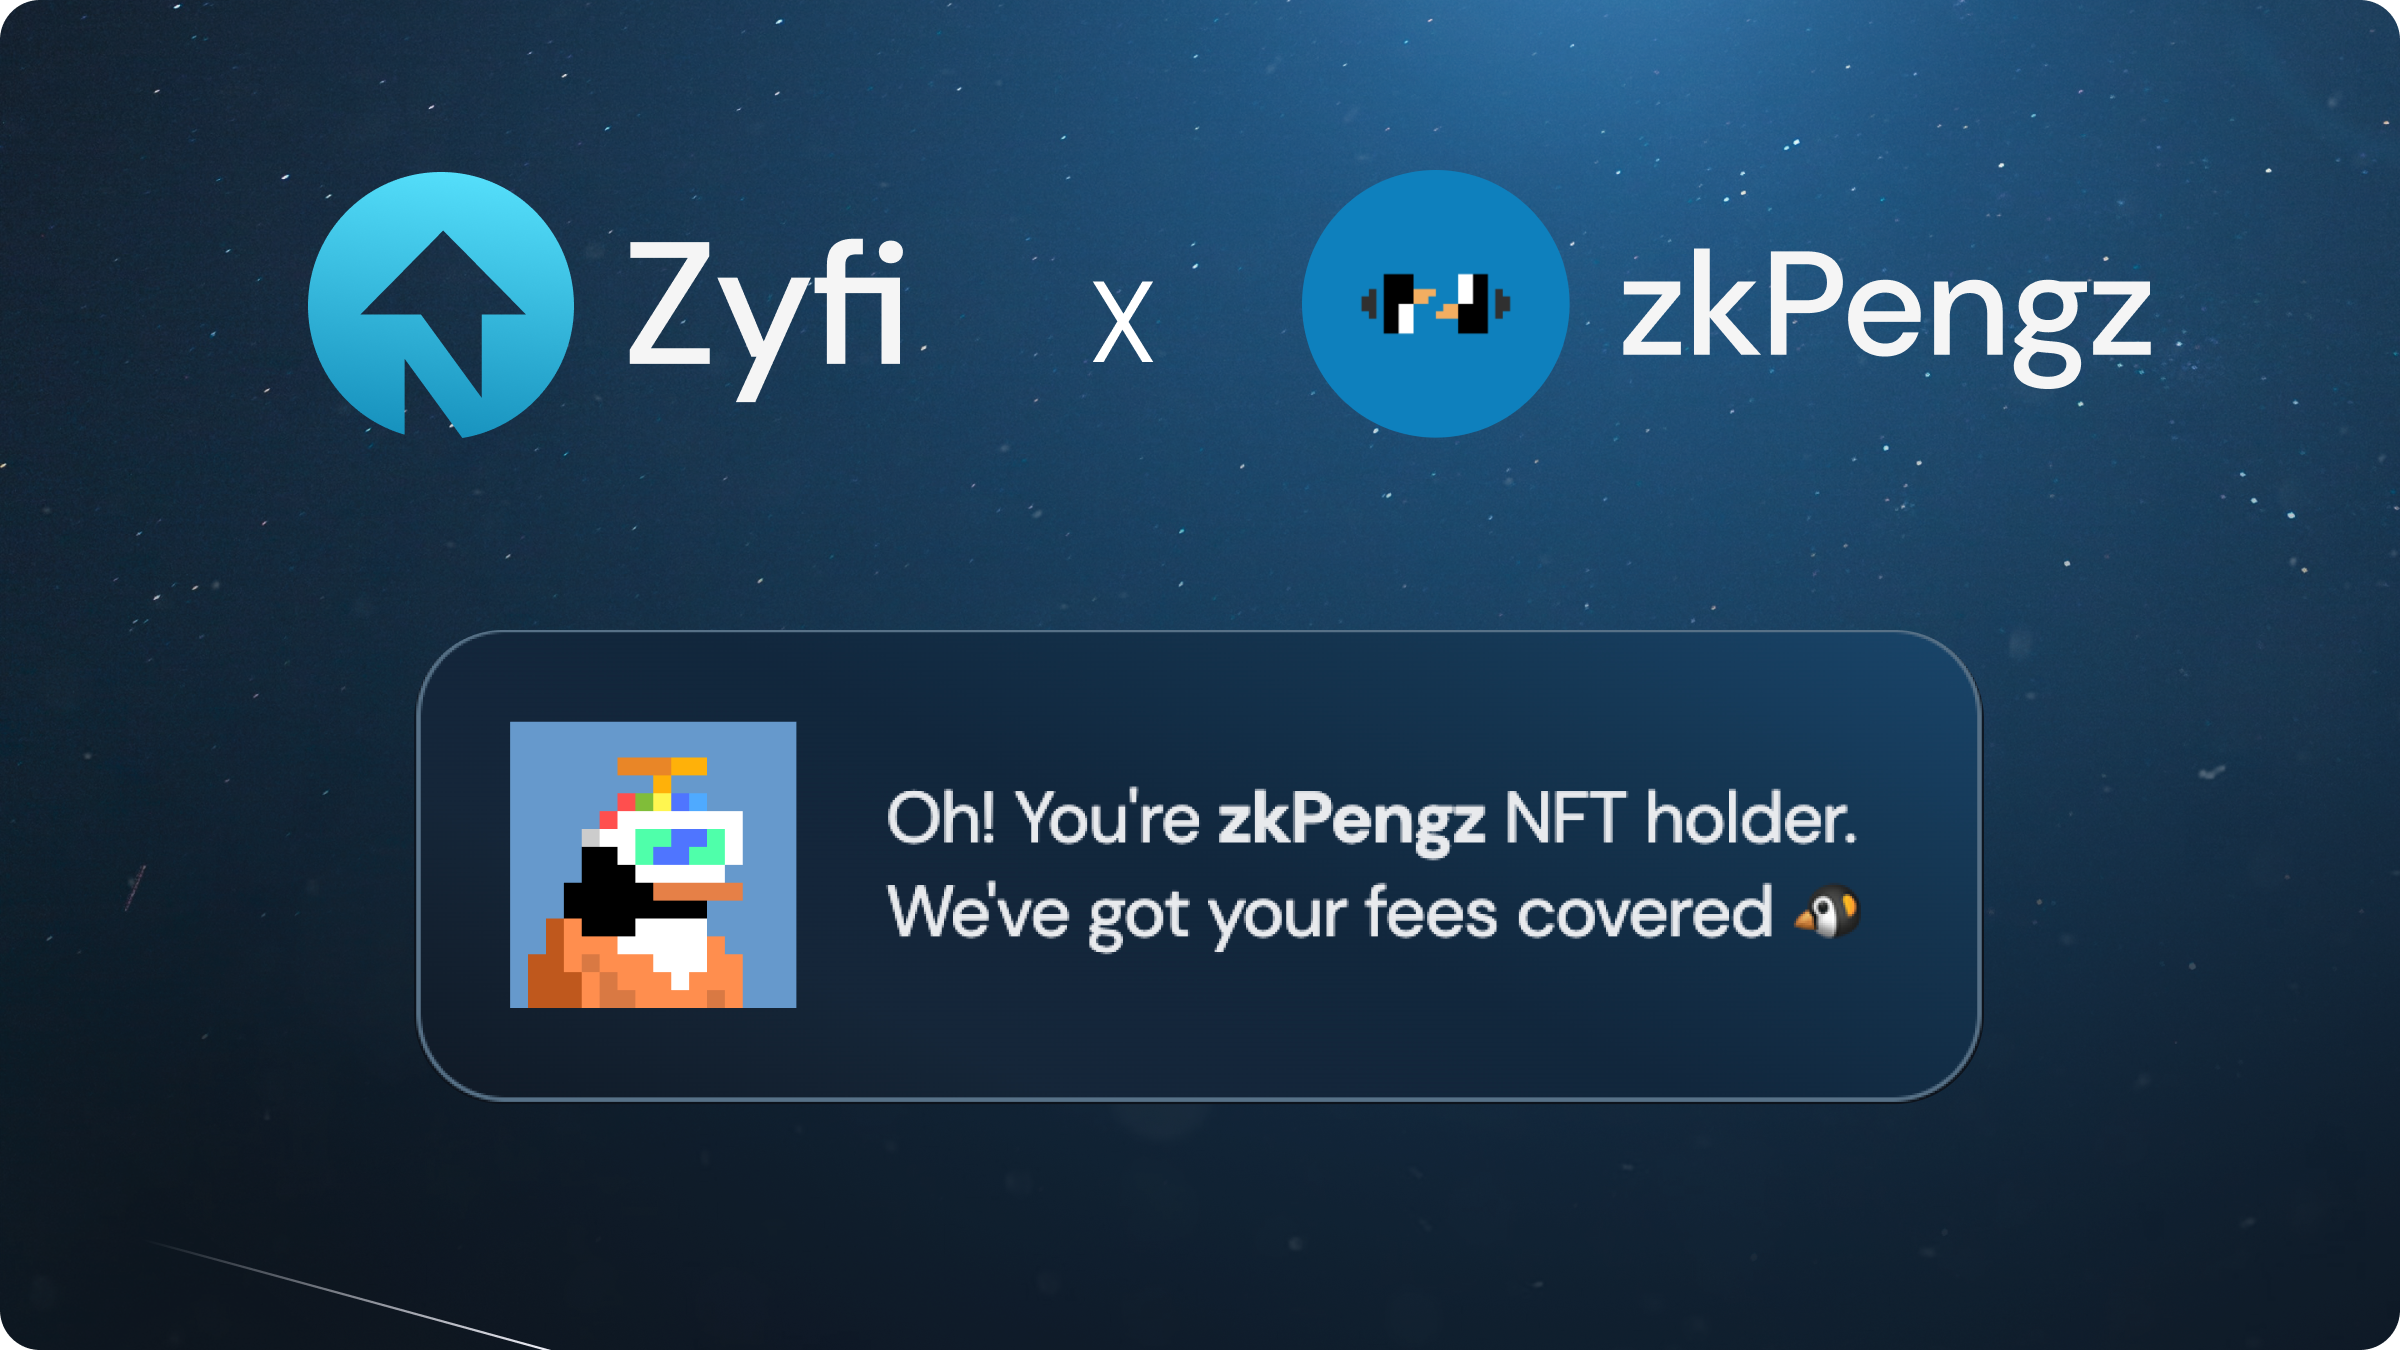 zkPengz NFT Holders enjoy free-swaps